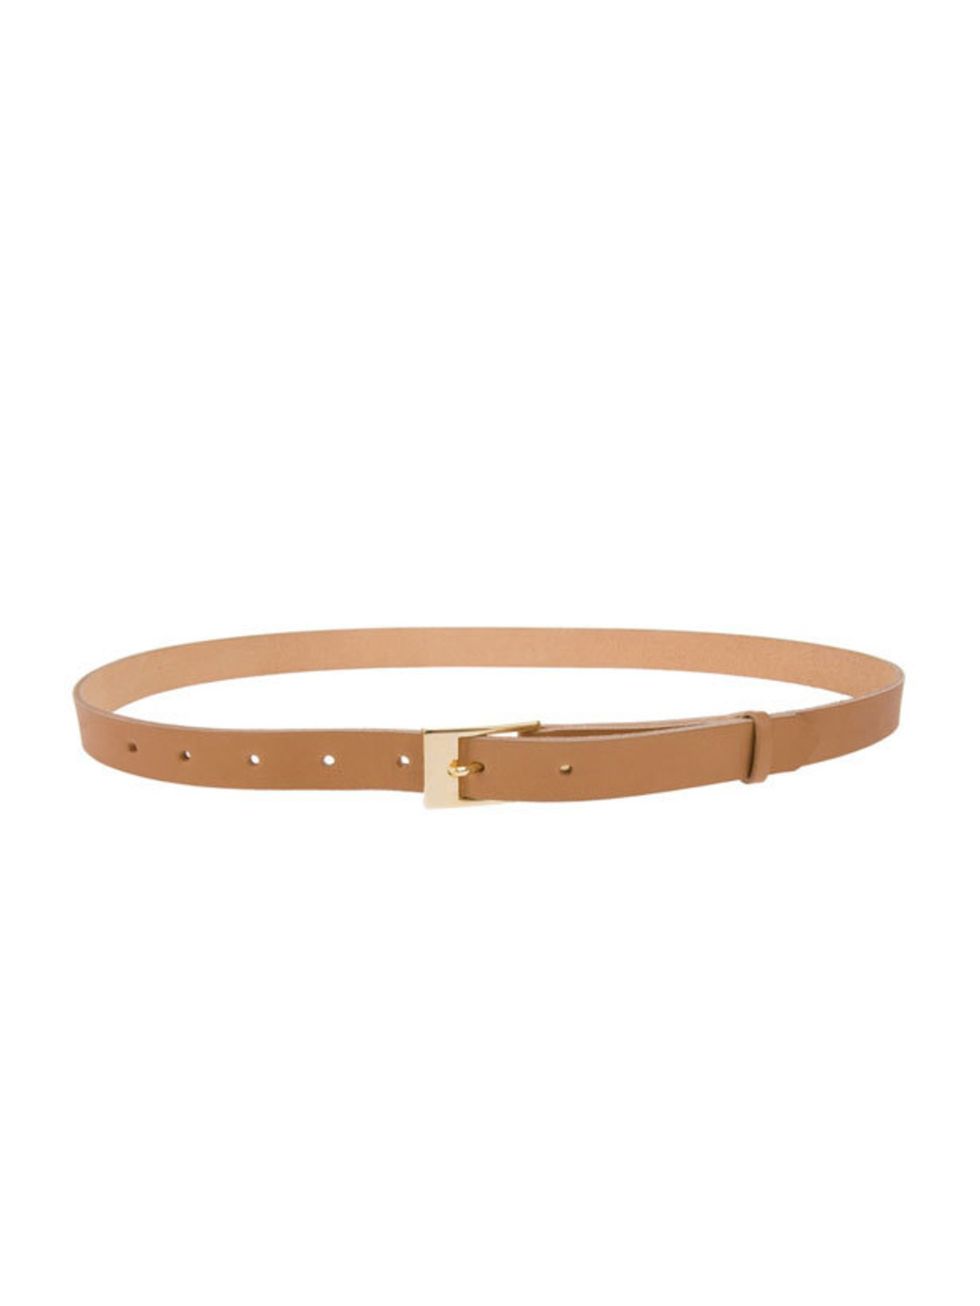 <p>Tan leather belt, £59, by Awai at <a href="http://www.bstorelondon.com/shopping/women/item10036572.aspx">b Store</a></p>